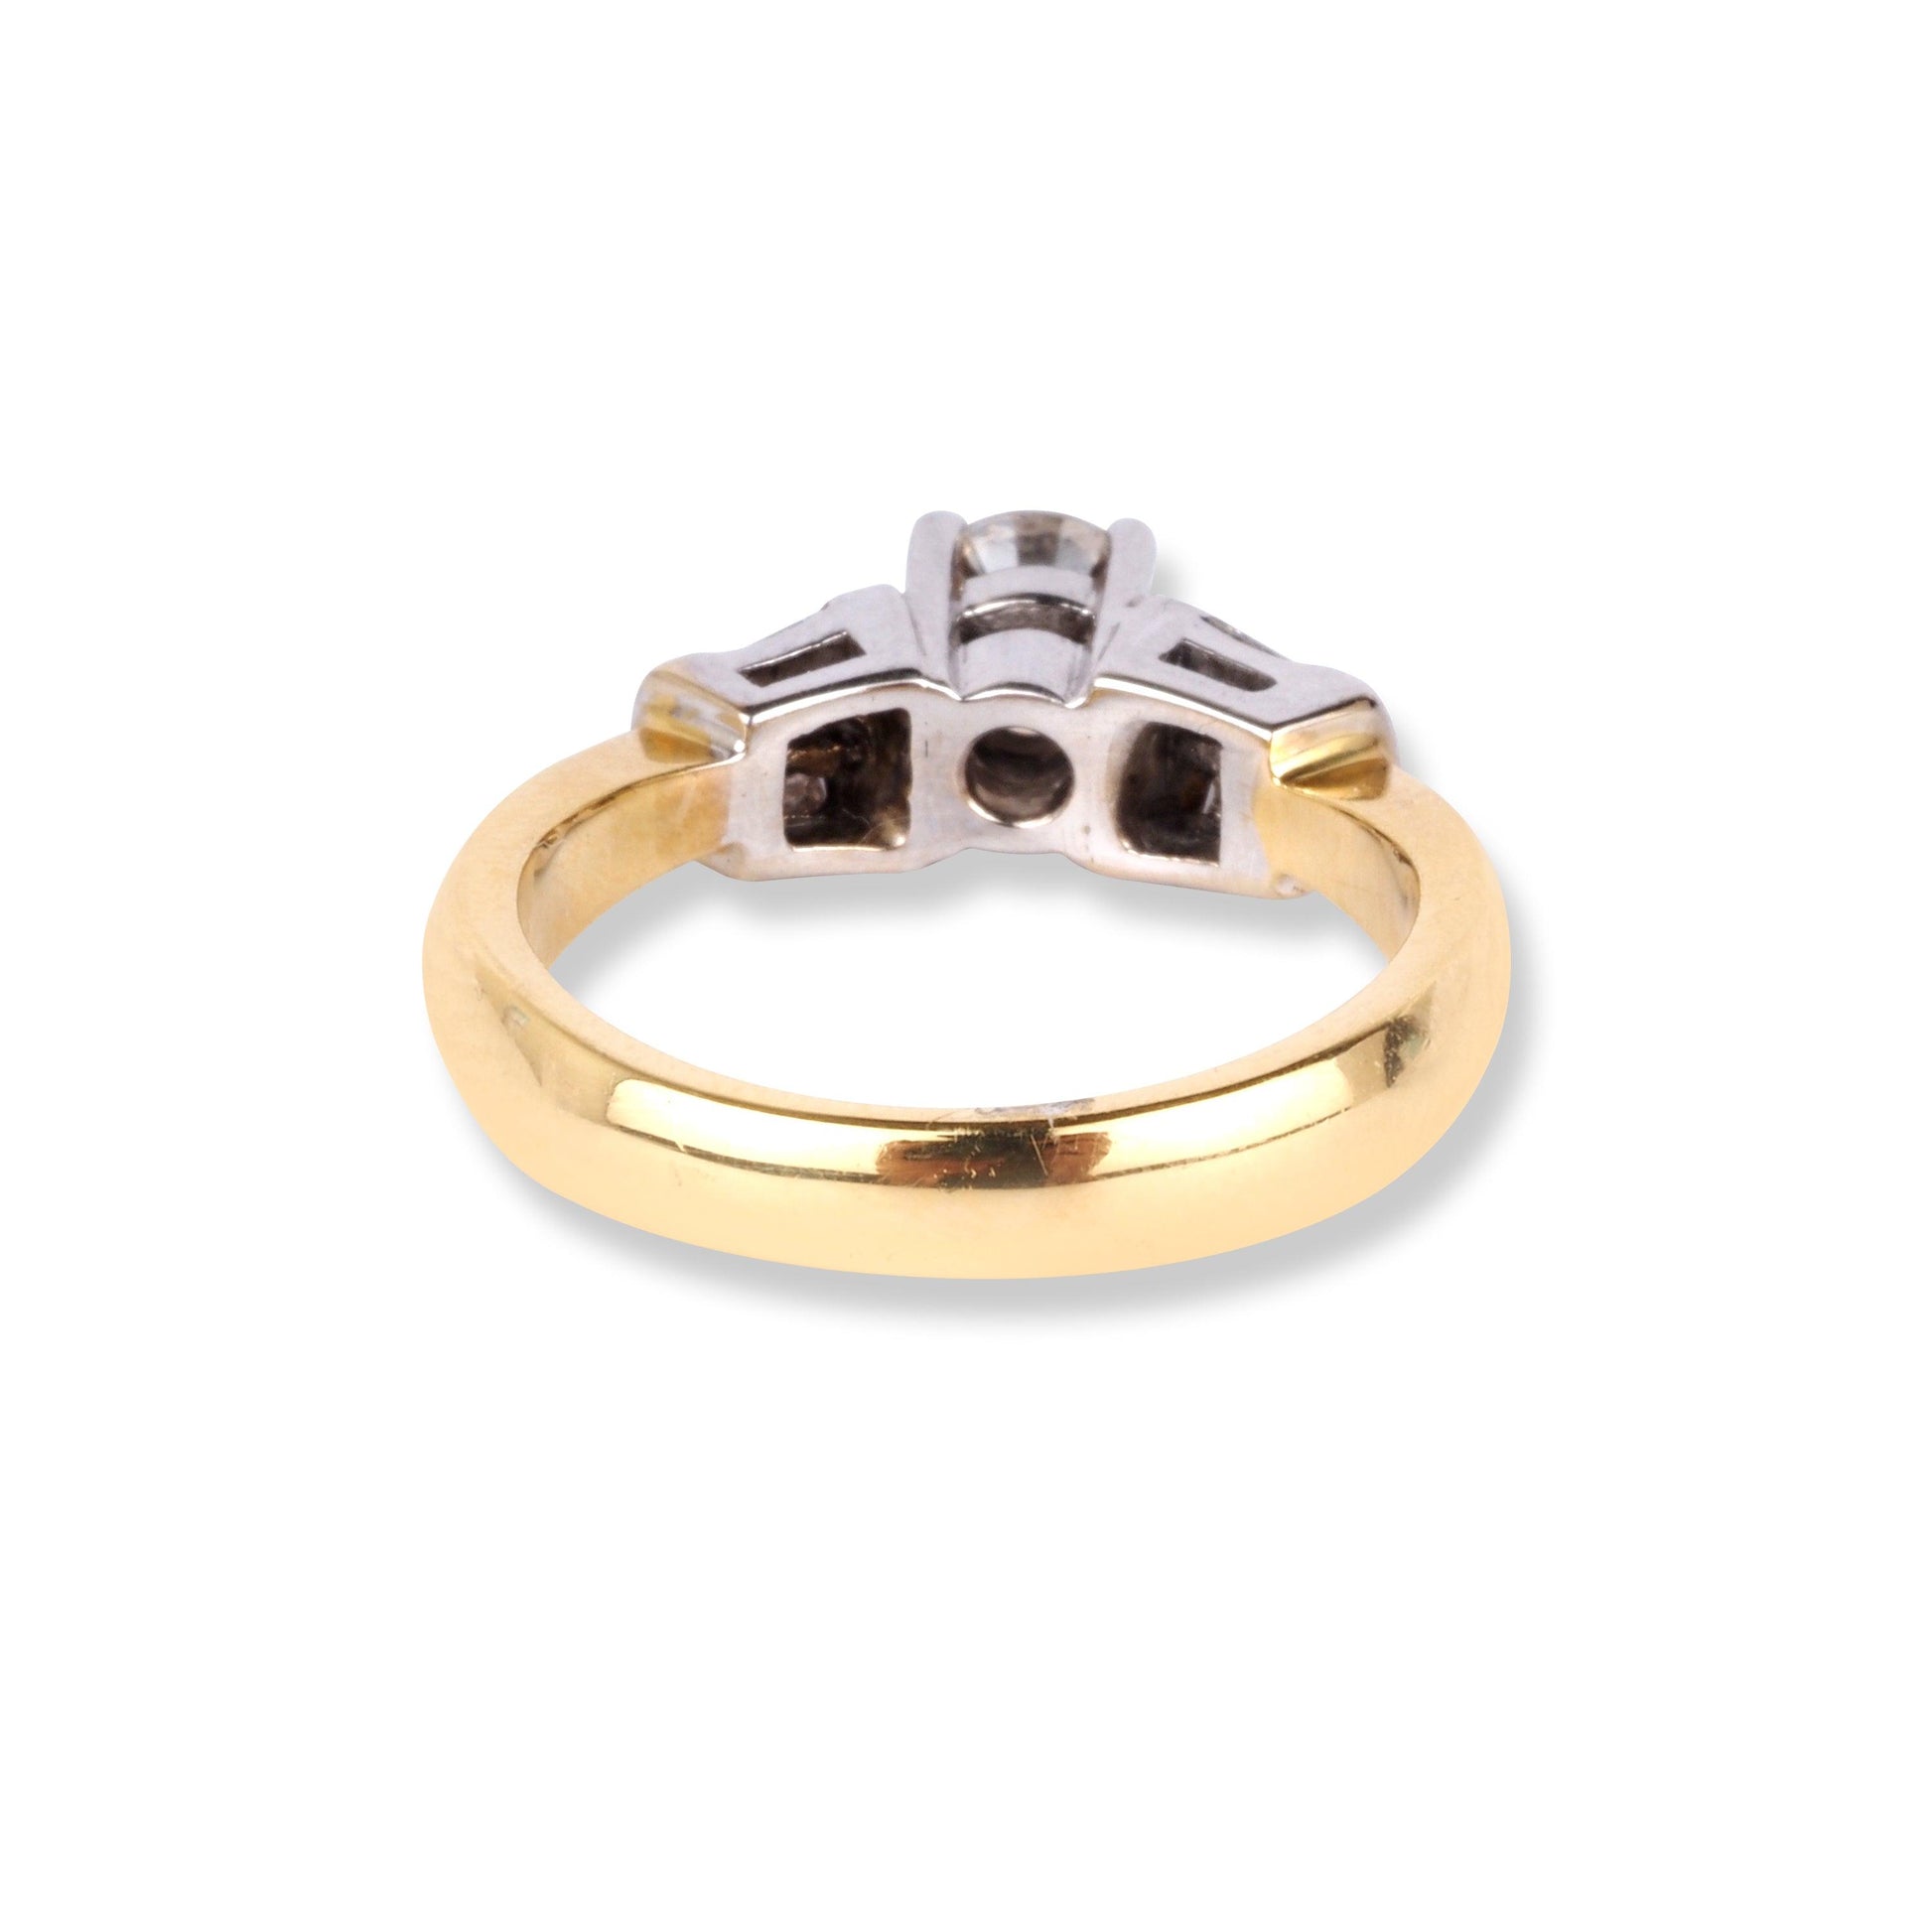 18ct Yellow Gold Diamond Ring with Rhodium Plating LR-1031 - Minar Jewellers